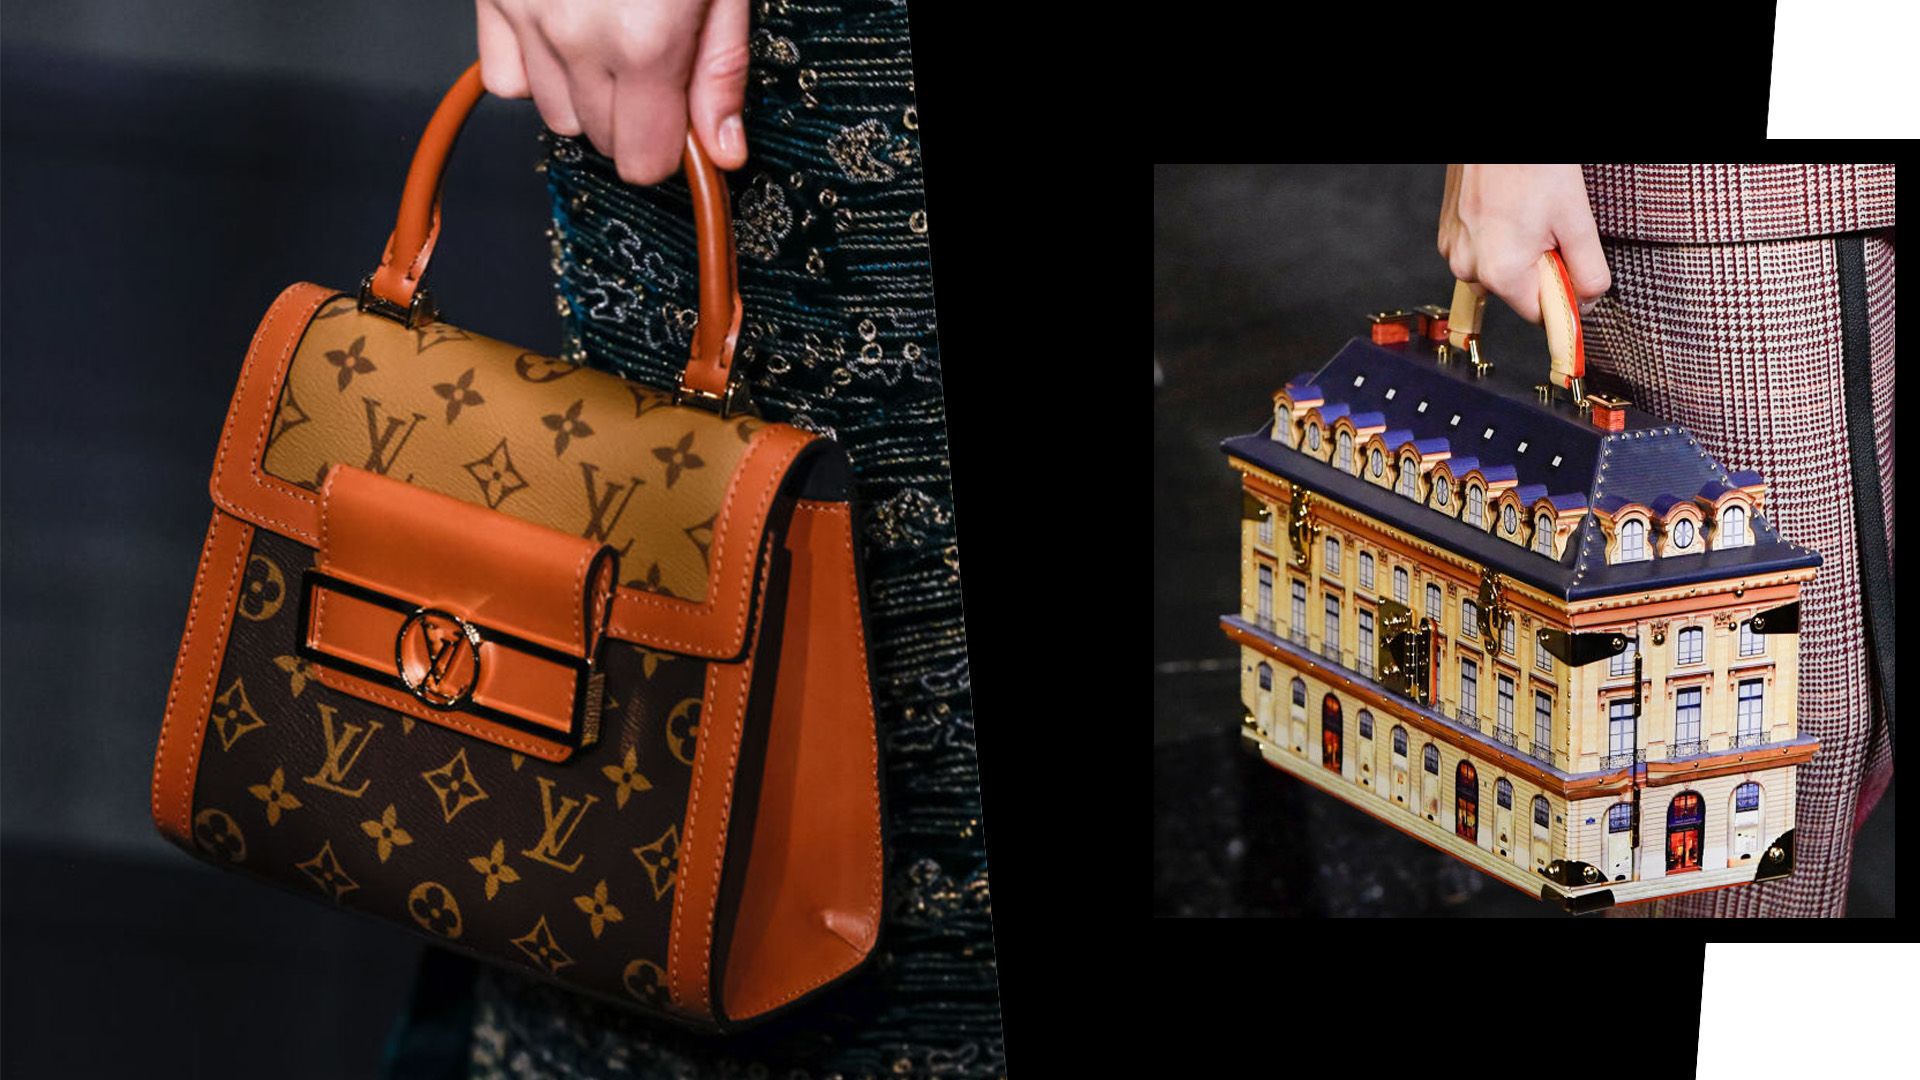 30 Of The Best Designer Handbag Brands Every Fashionista Should